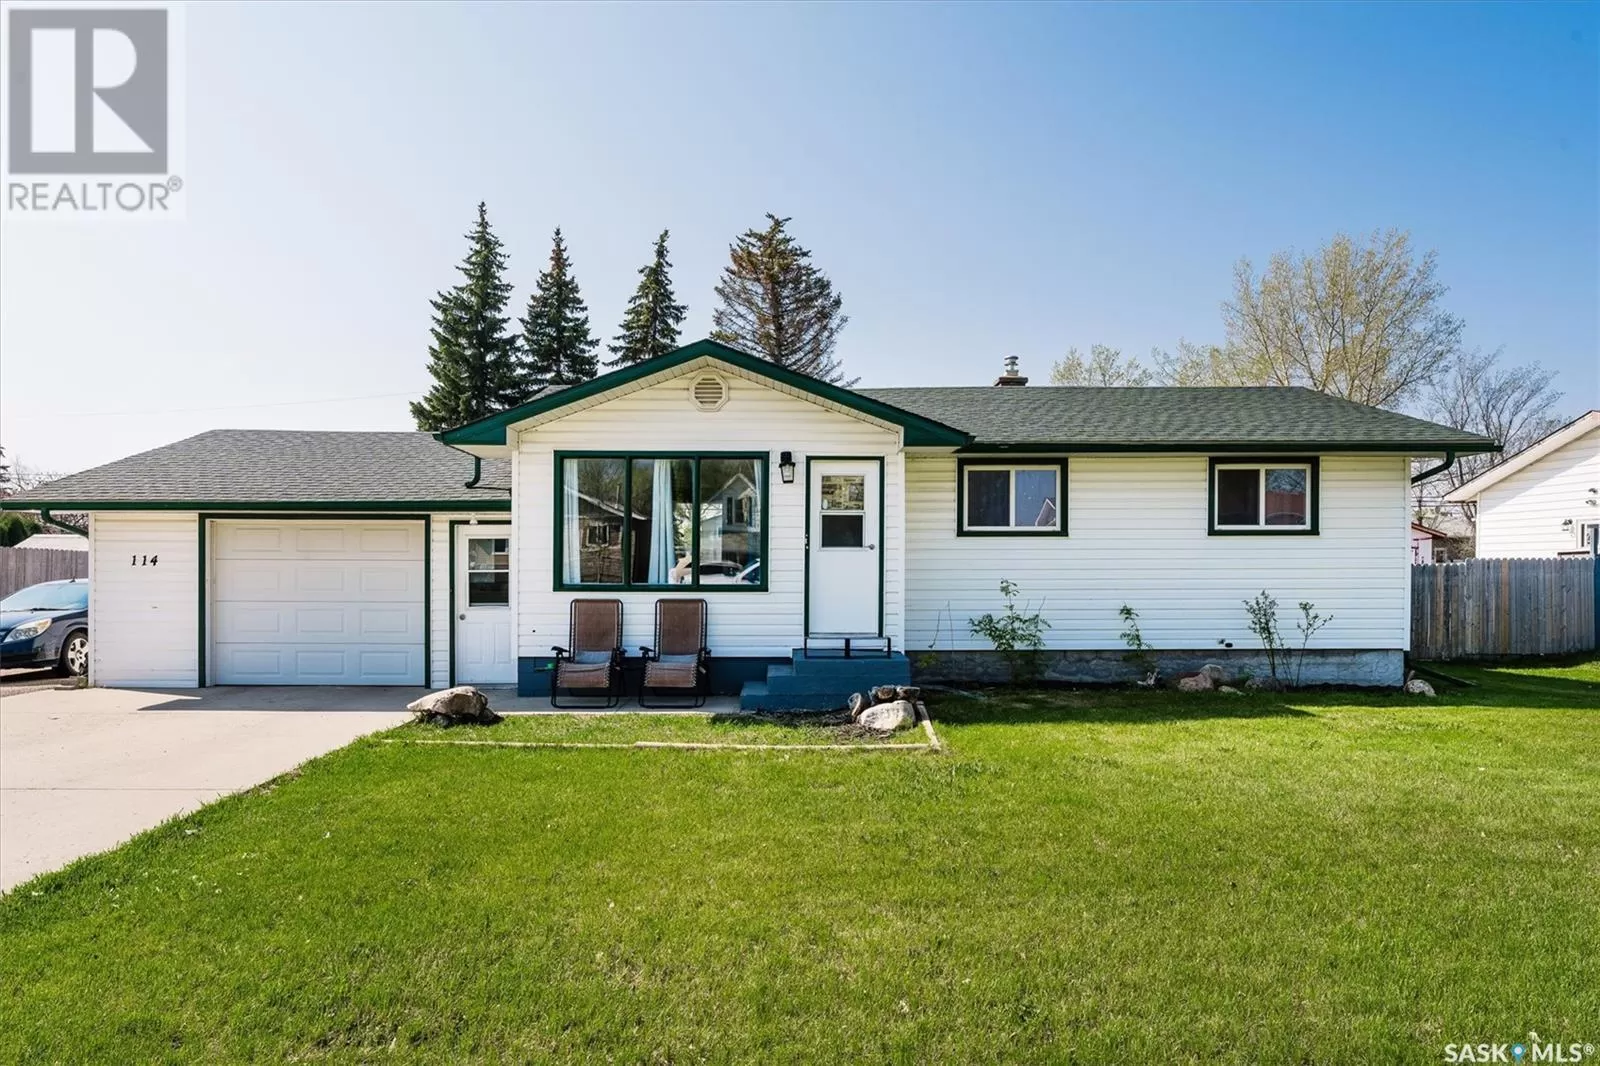 House for rent: 114 2nd Street S, Martensville, Saskatchewan S0K 2T0